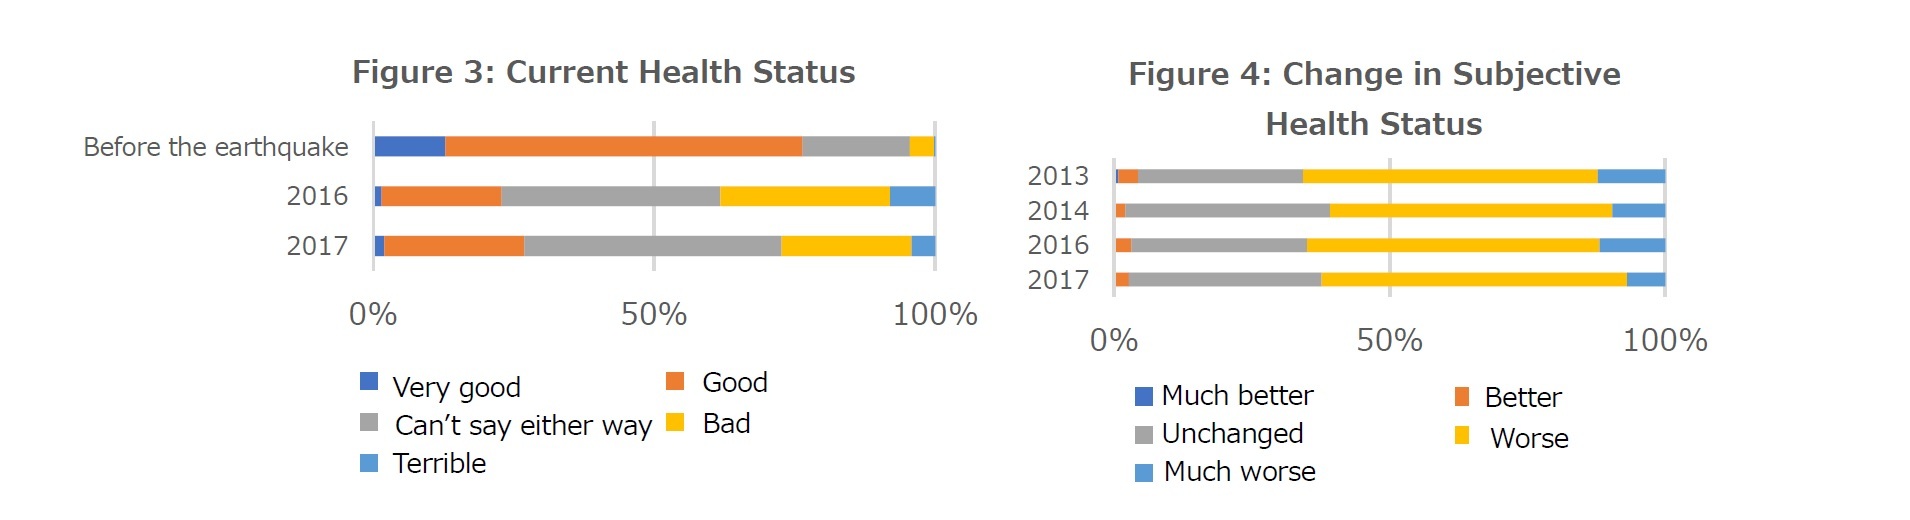 Figure 3: Current Health Status/Figure 4: Change in Subjective 
Health Status